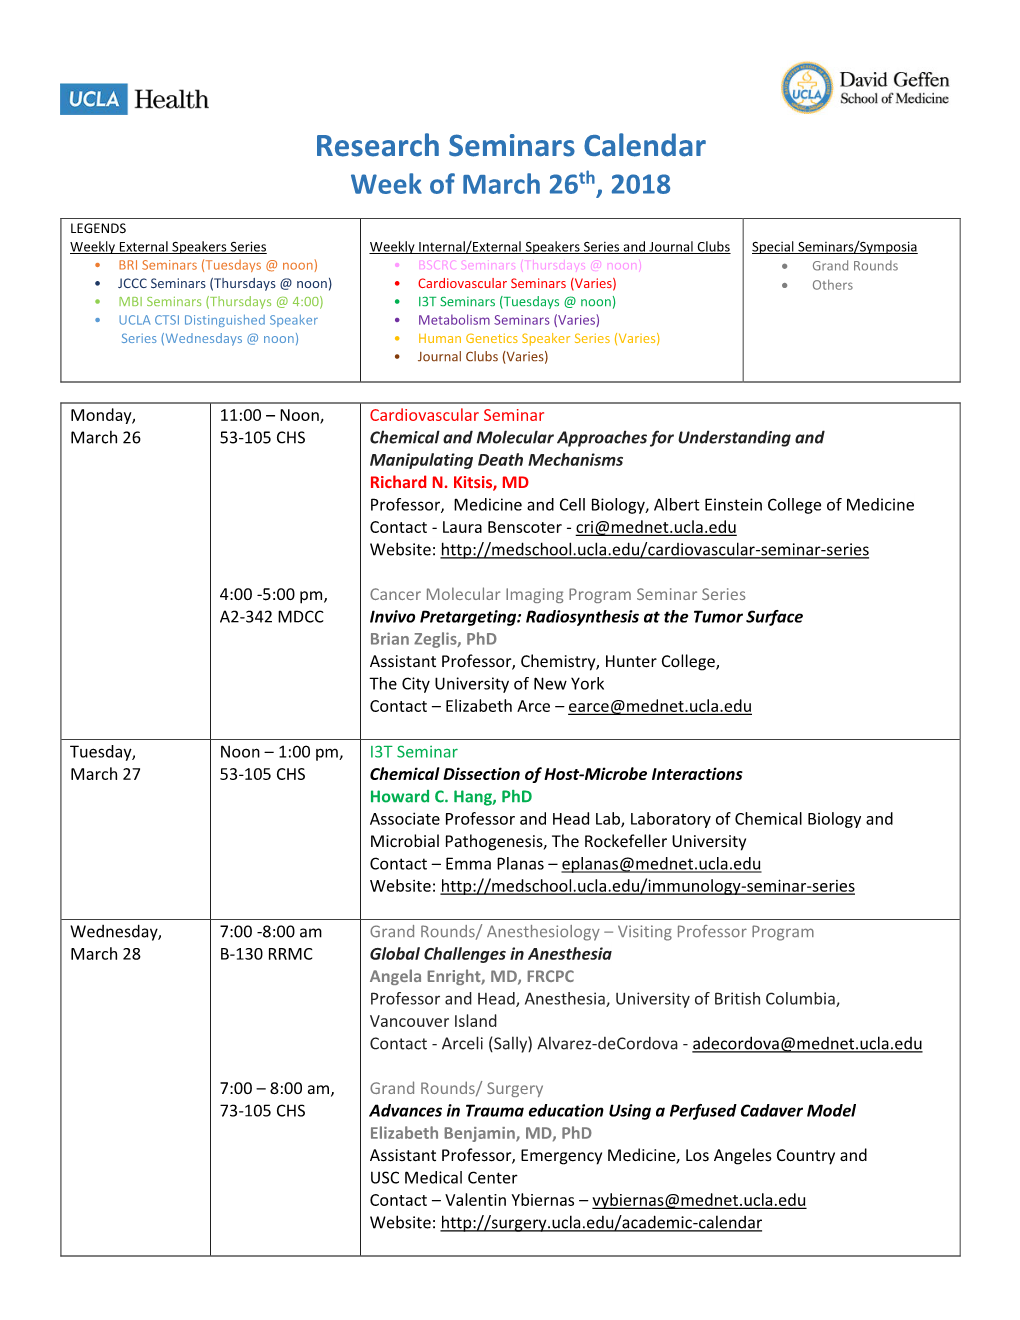 Resarch Seminars March 26 Thru April 6, 2018